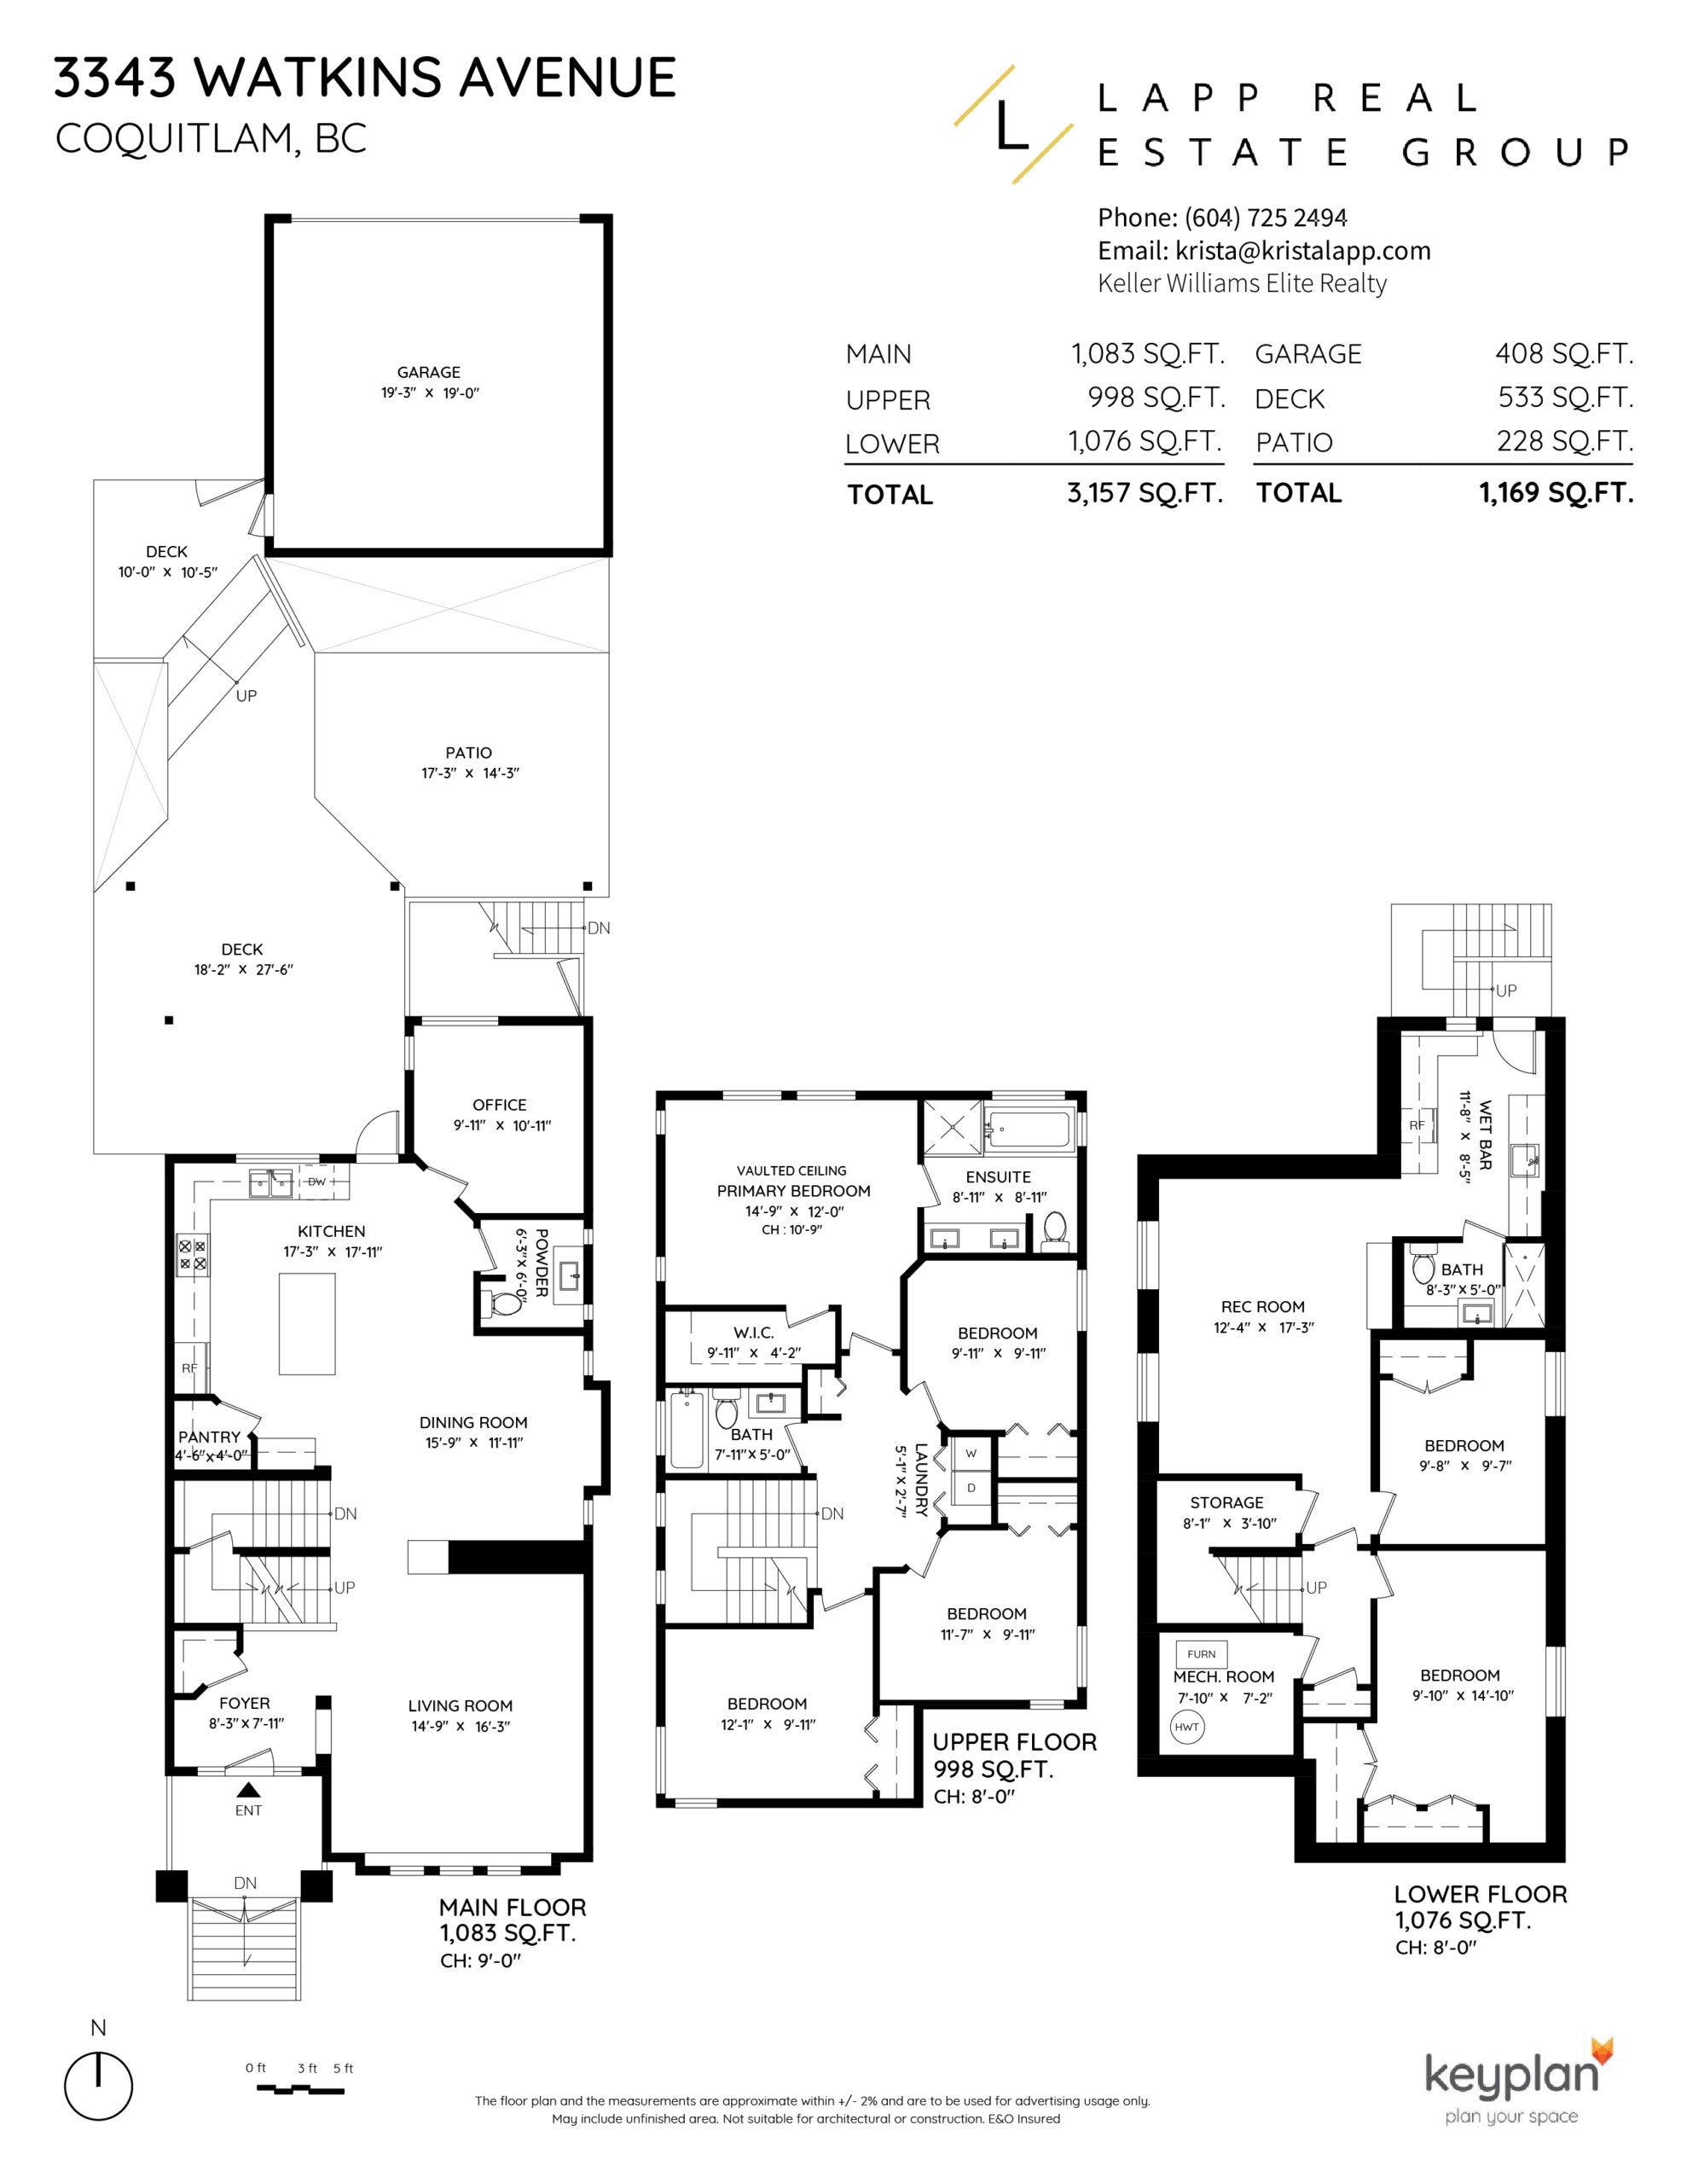 Burke Mountain Realtor Krista Lapp 3343 Watkins Ave Coquitlam Floor Plan 2